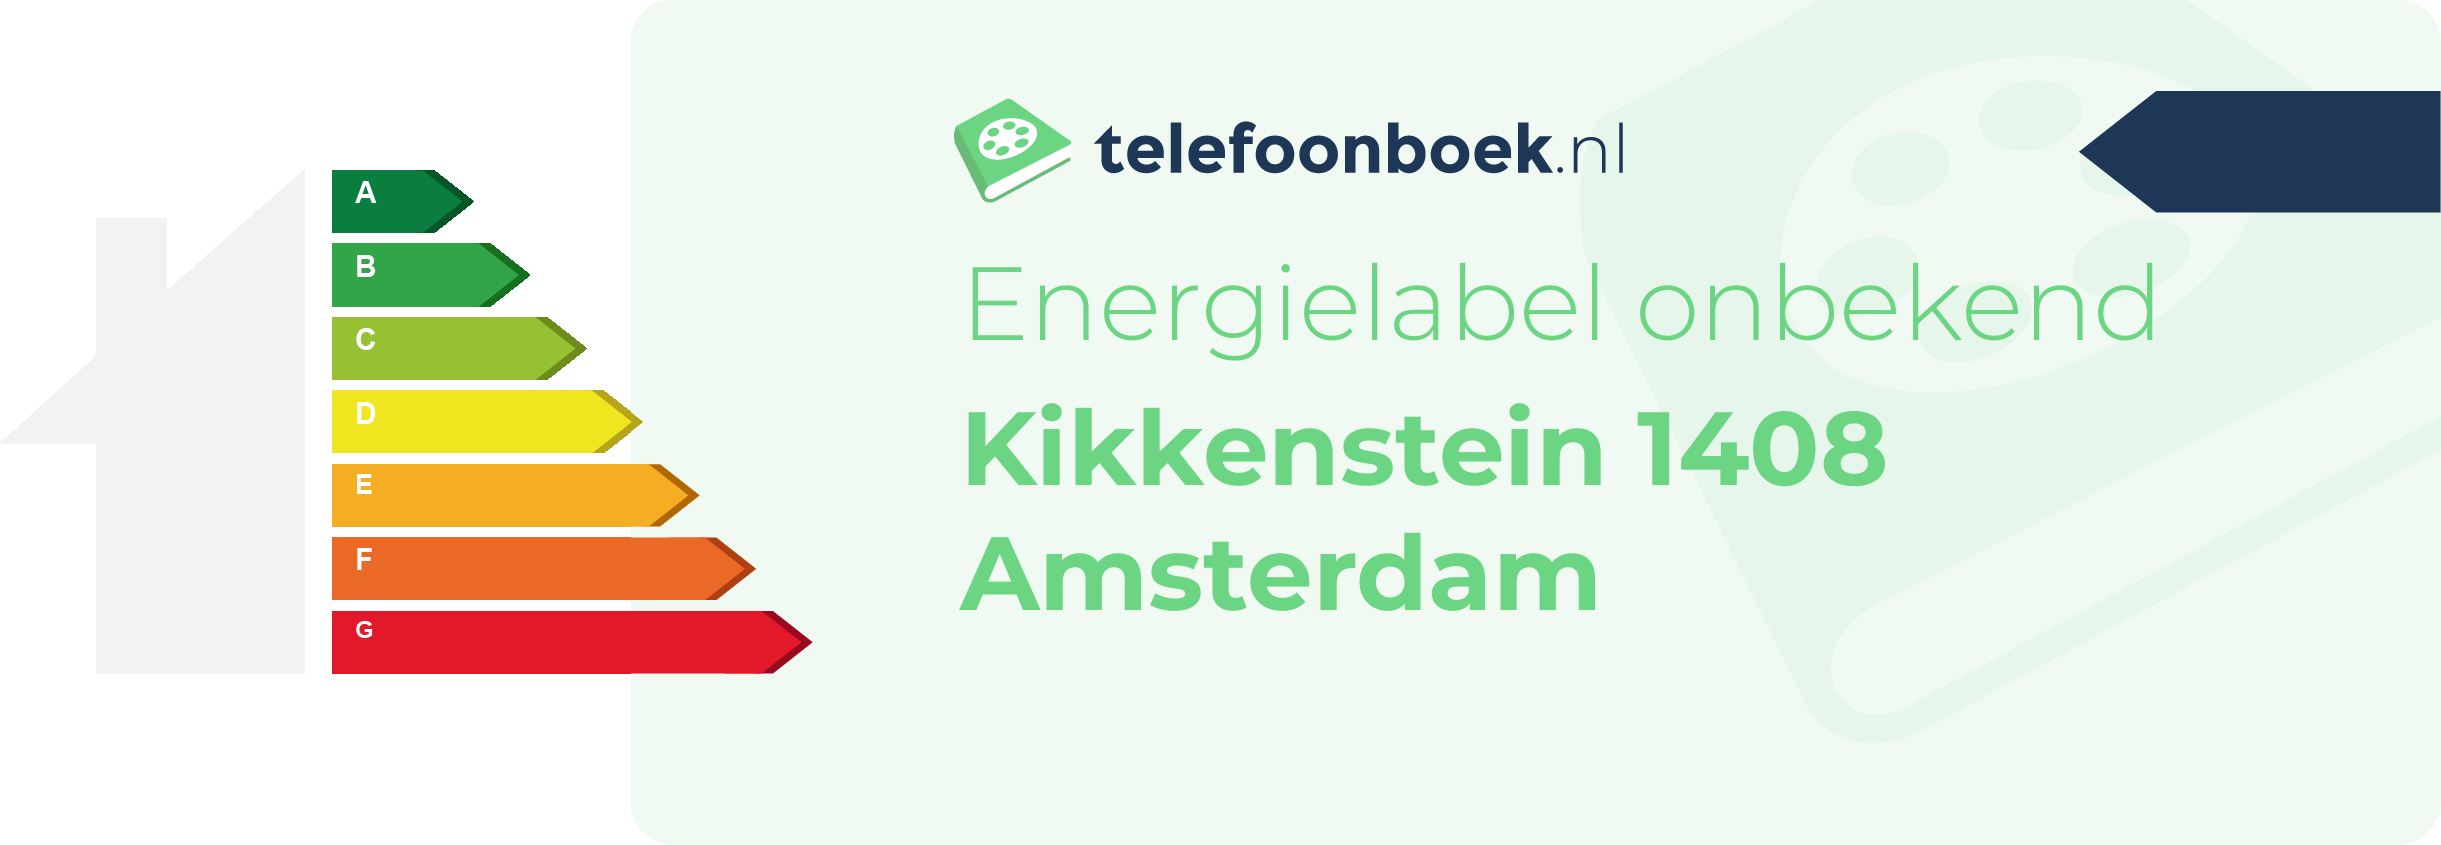 Energielabel Kikkenstein 1408 Amsterdam